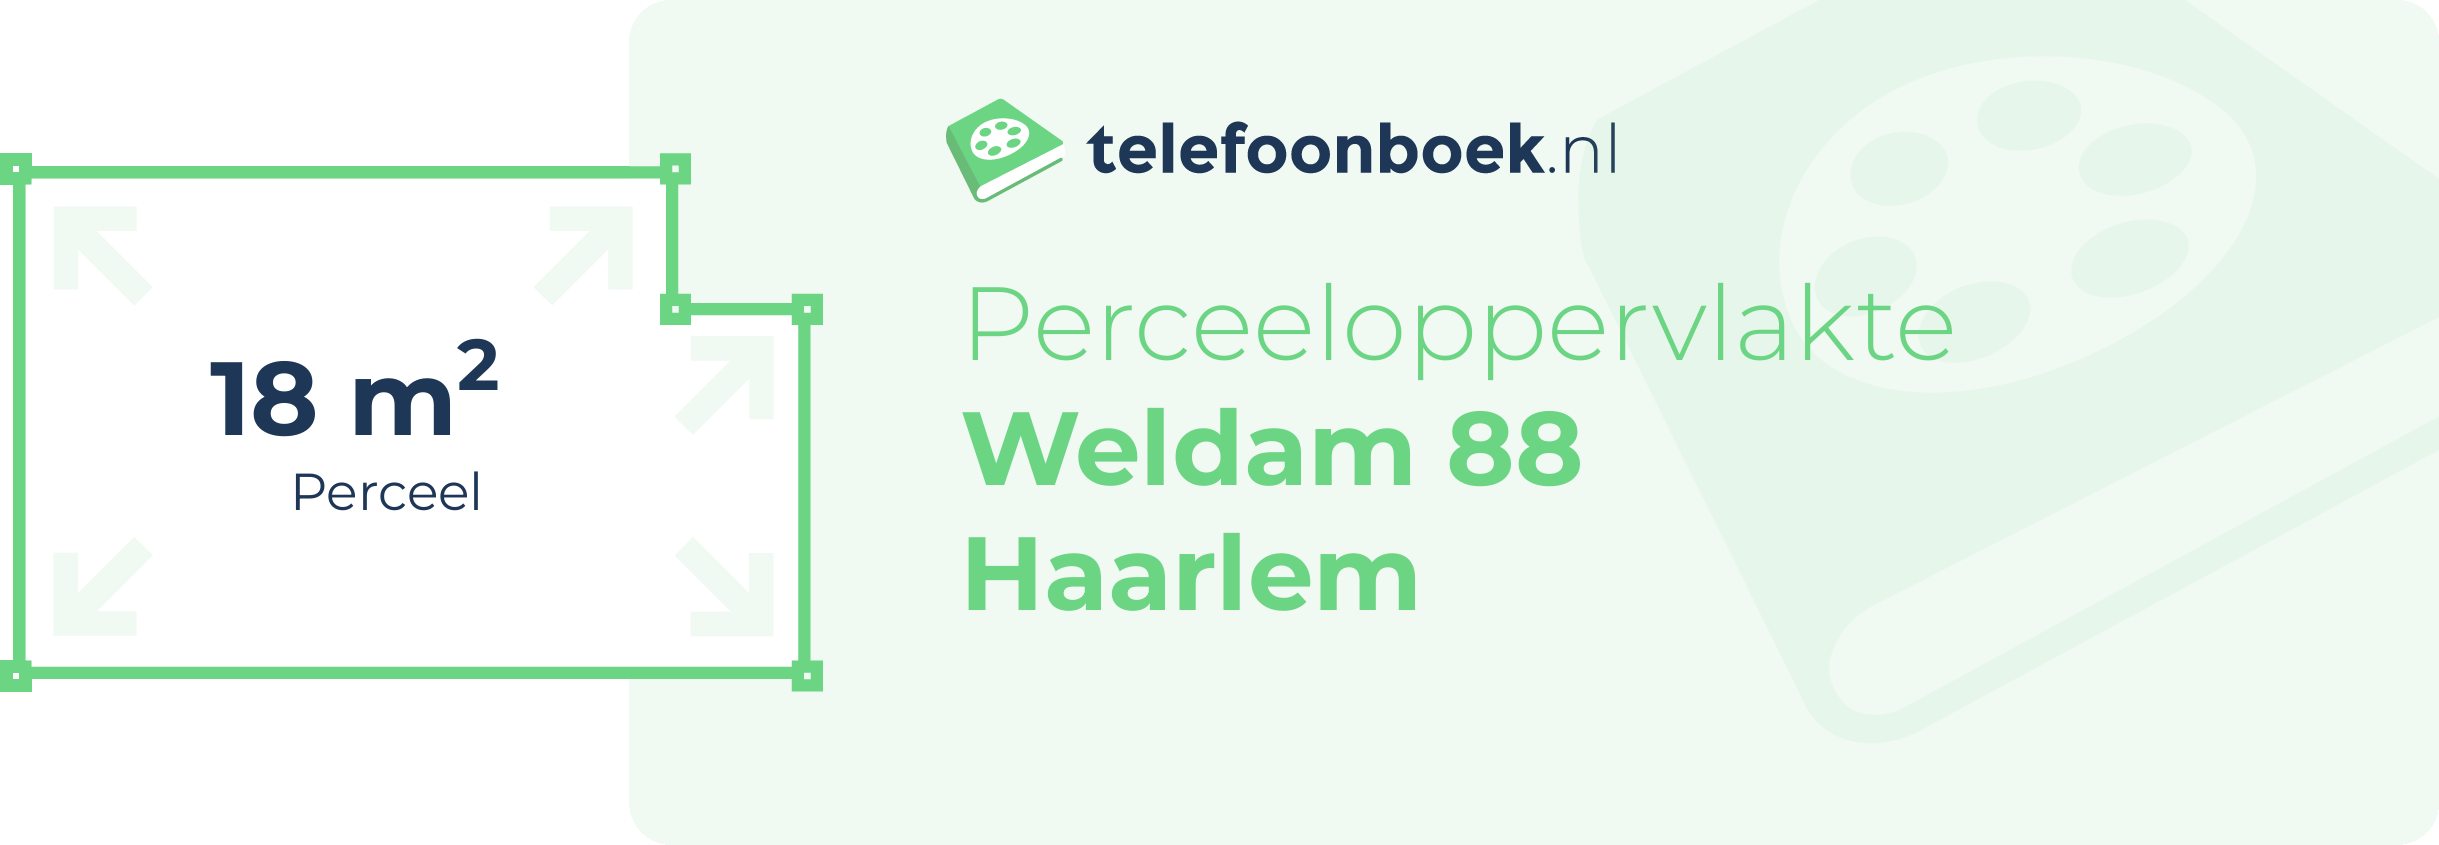 Perceeloppervlakte Weldam 88 Haarlem